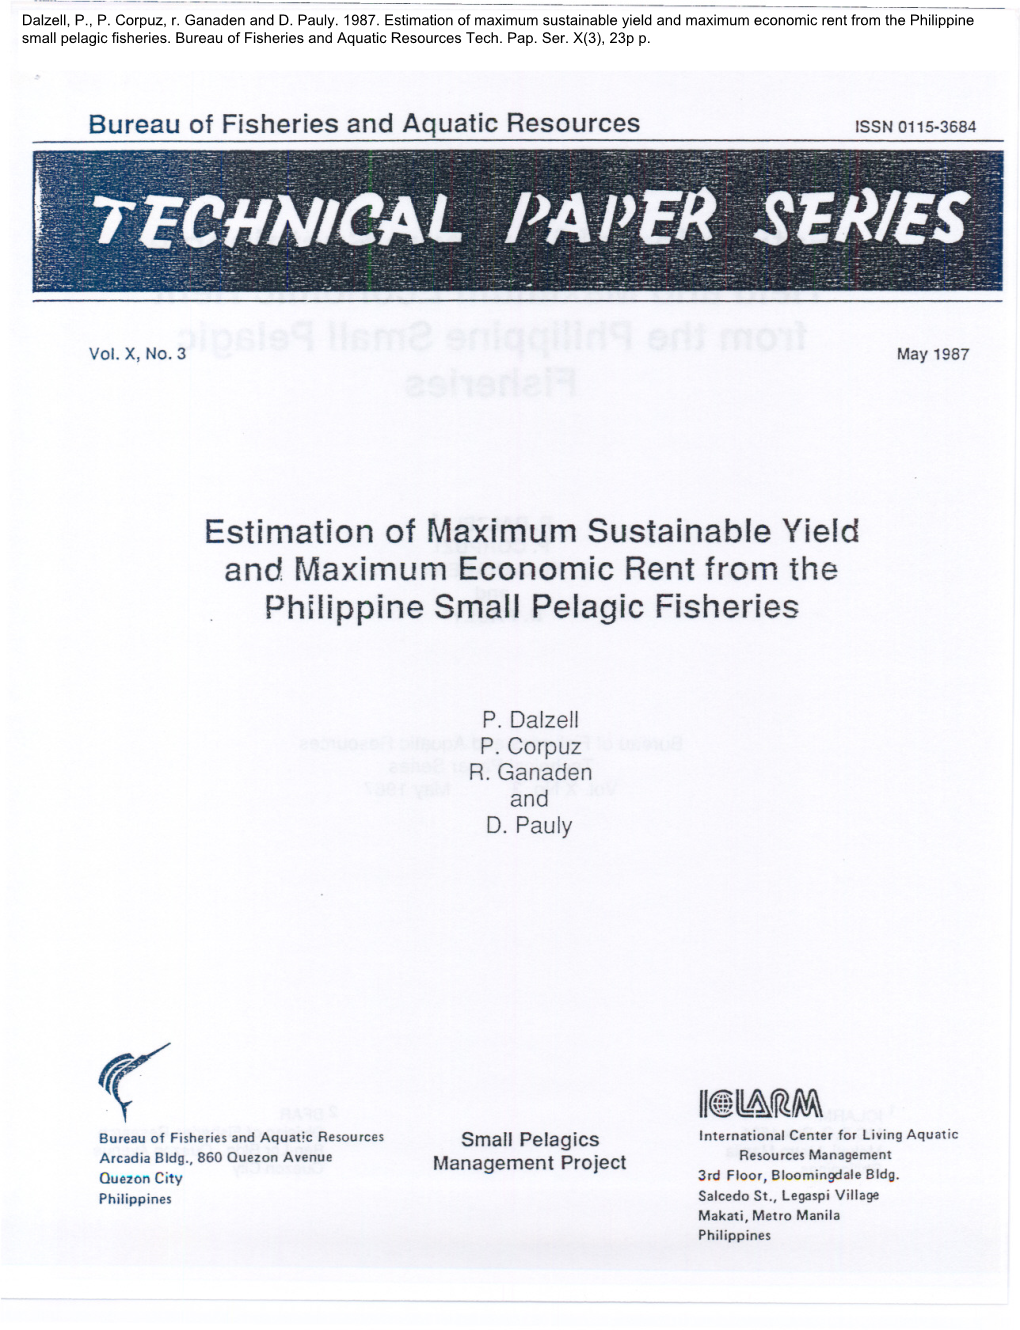 Estimation of Maximum Sustainable Yield and Maximum Economic Rent from the Ph,Lippine Small Pelagic Fisheries